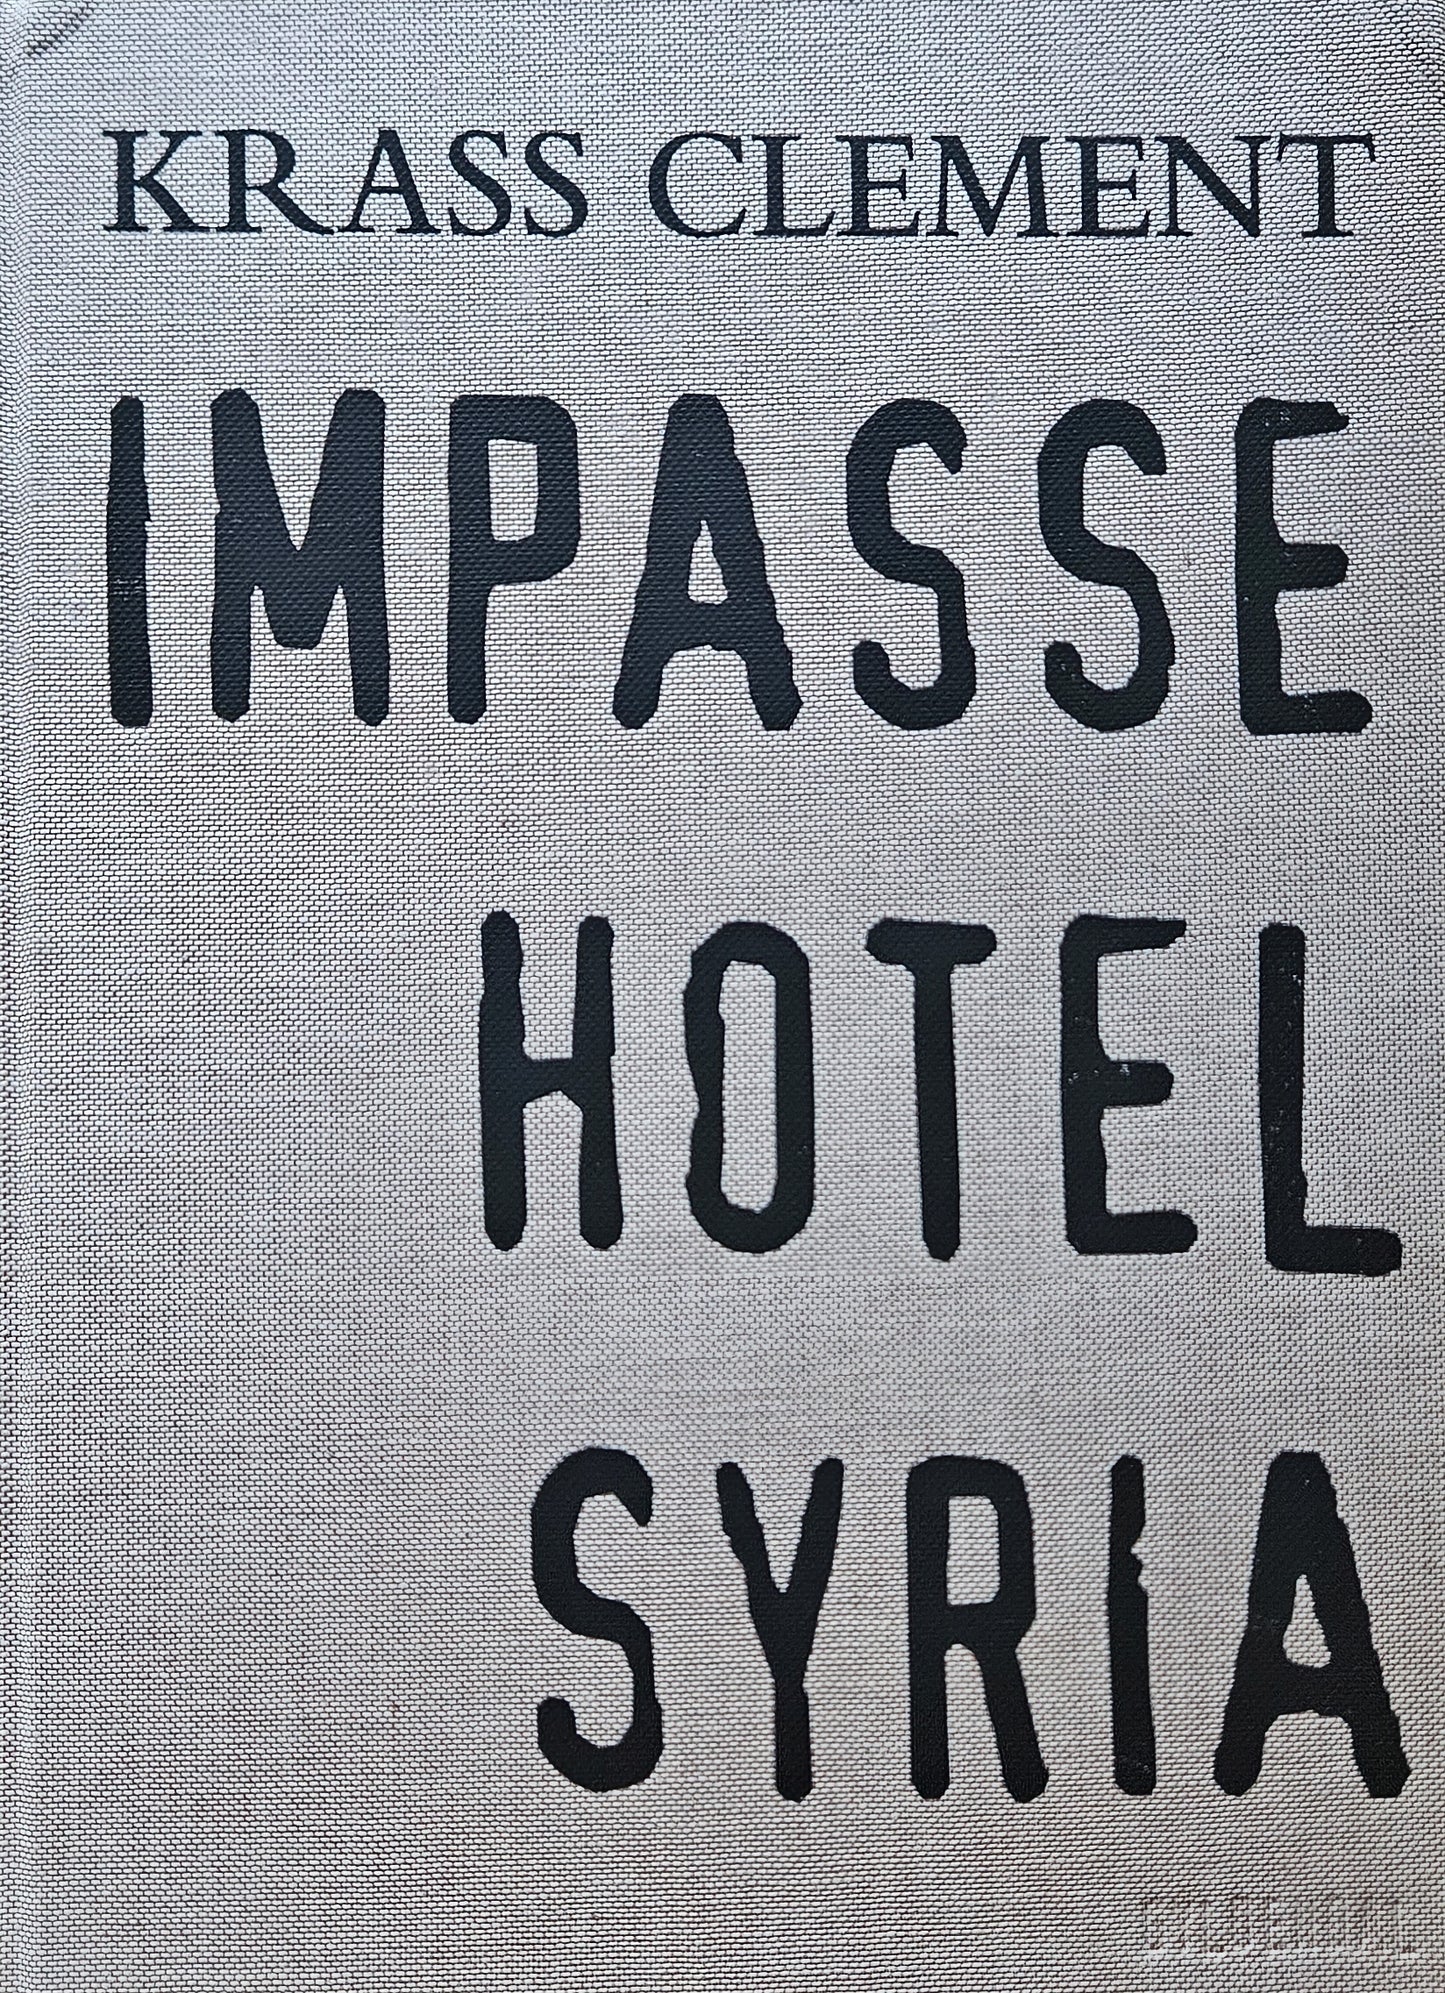 IMPASSE HOTEL SYRIA by Krass Clement